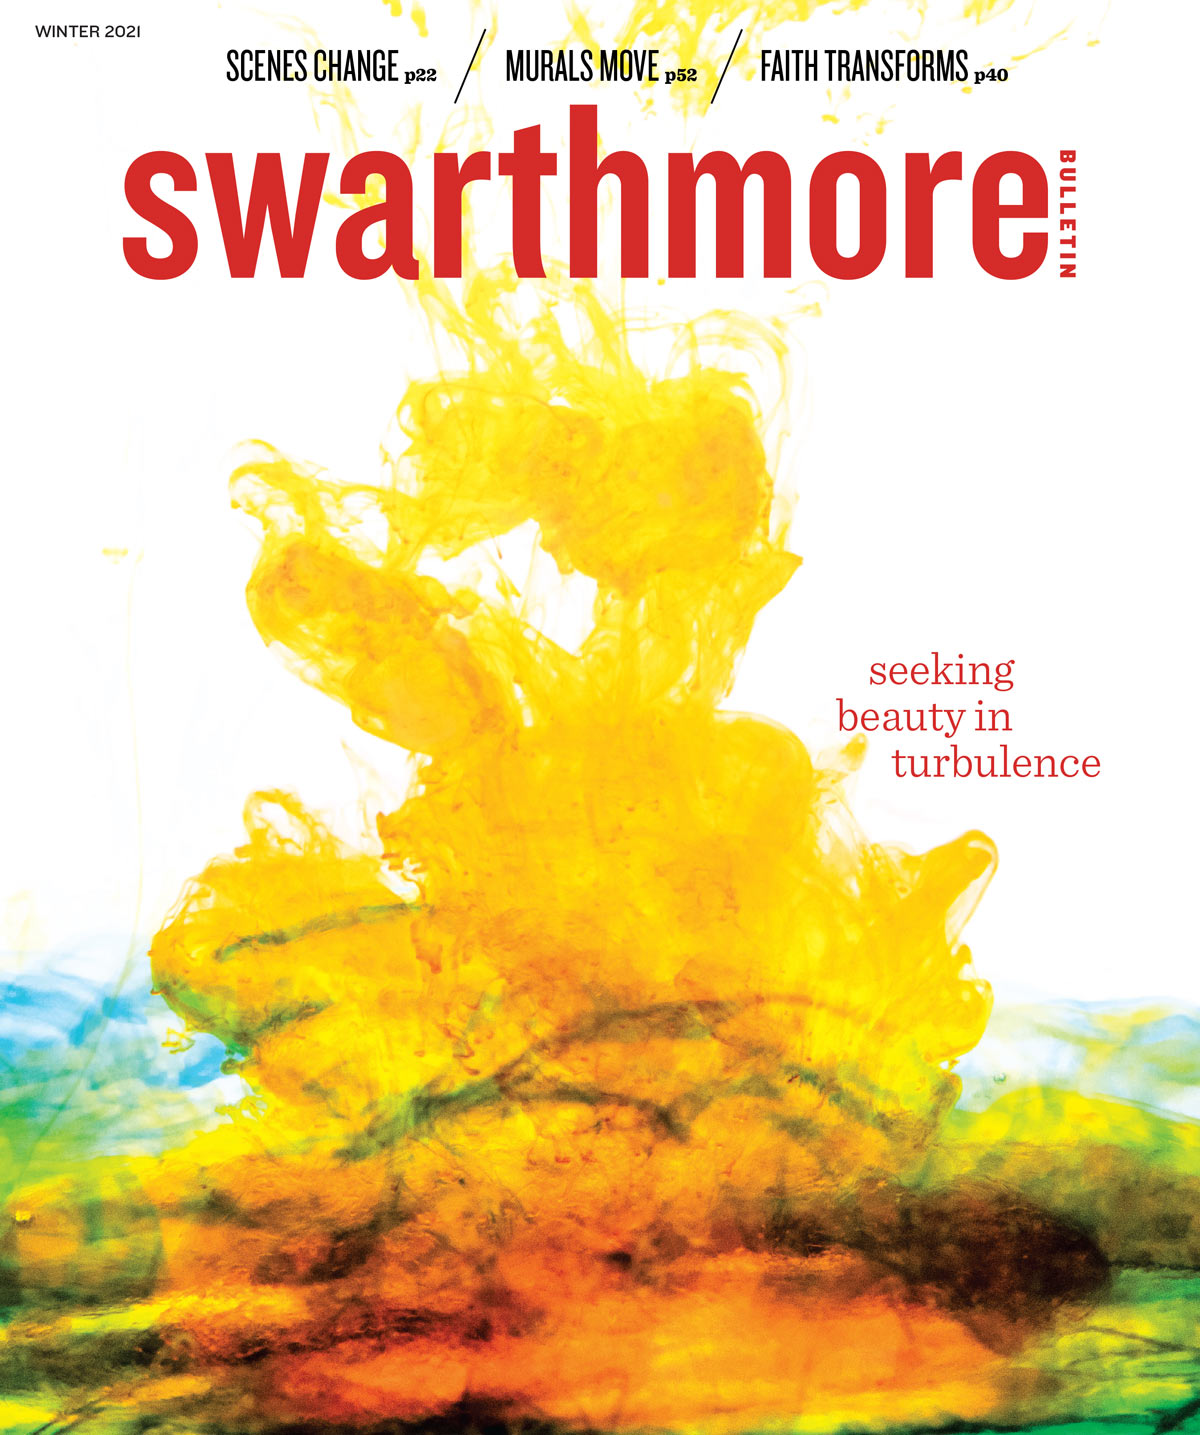 Swarthmore cover - Swirls of colored liquids